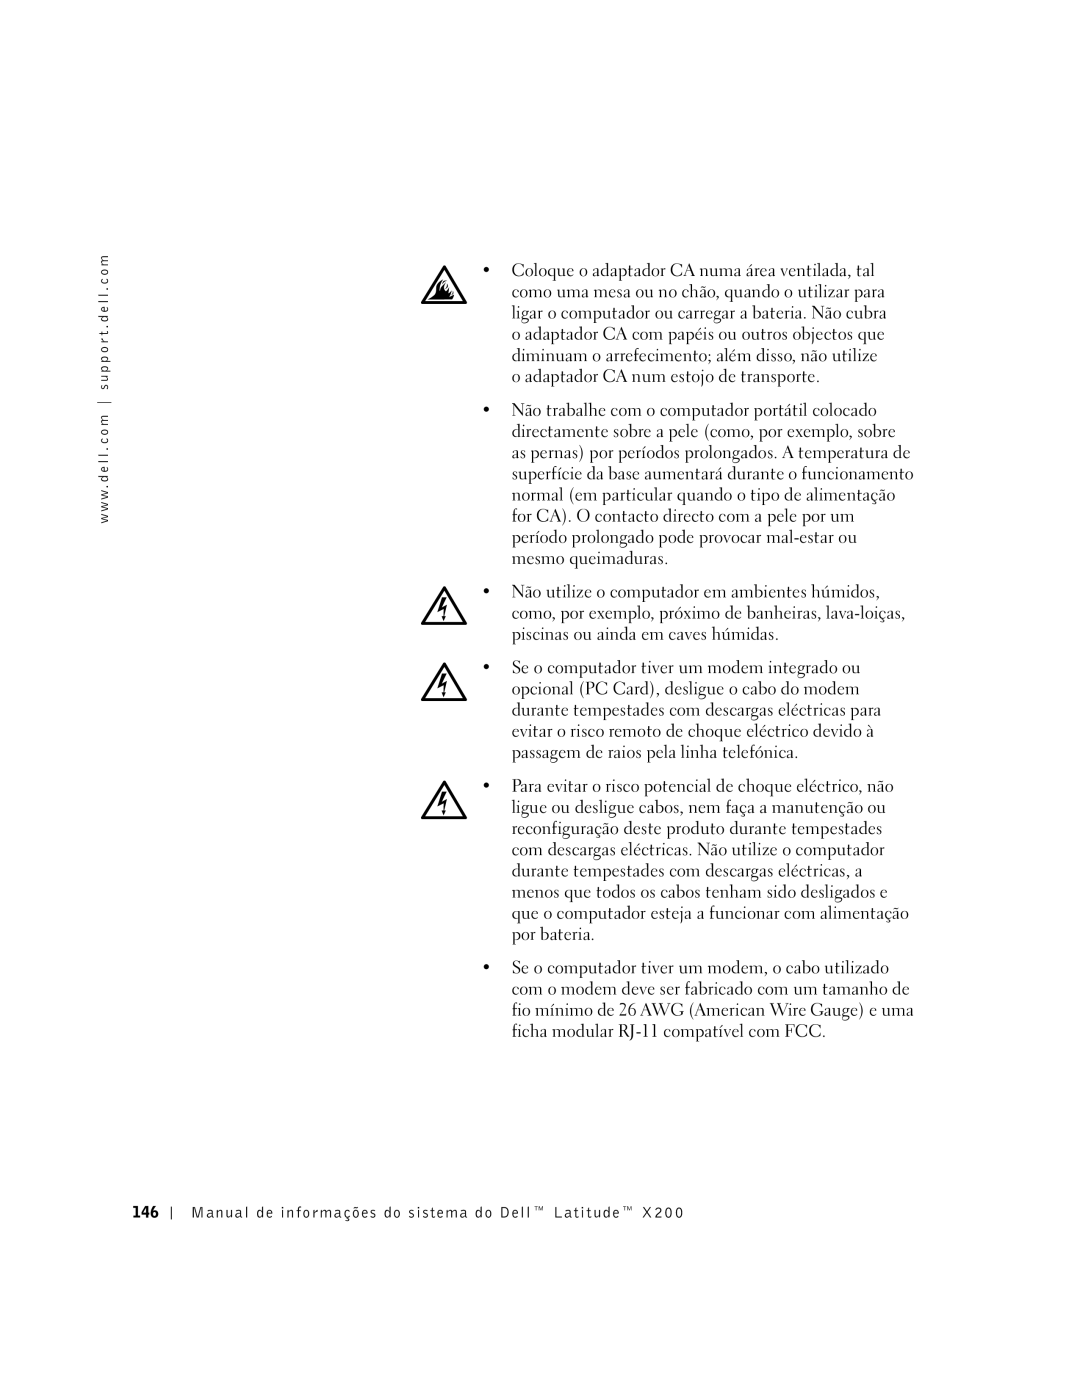 LeapFrog PP03S manual Manual de informações do sistema do Dell Latitude 